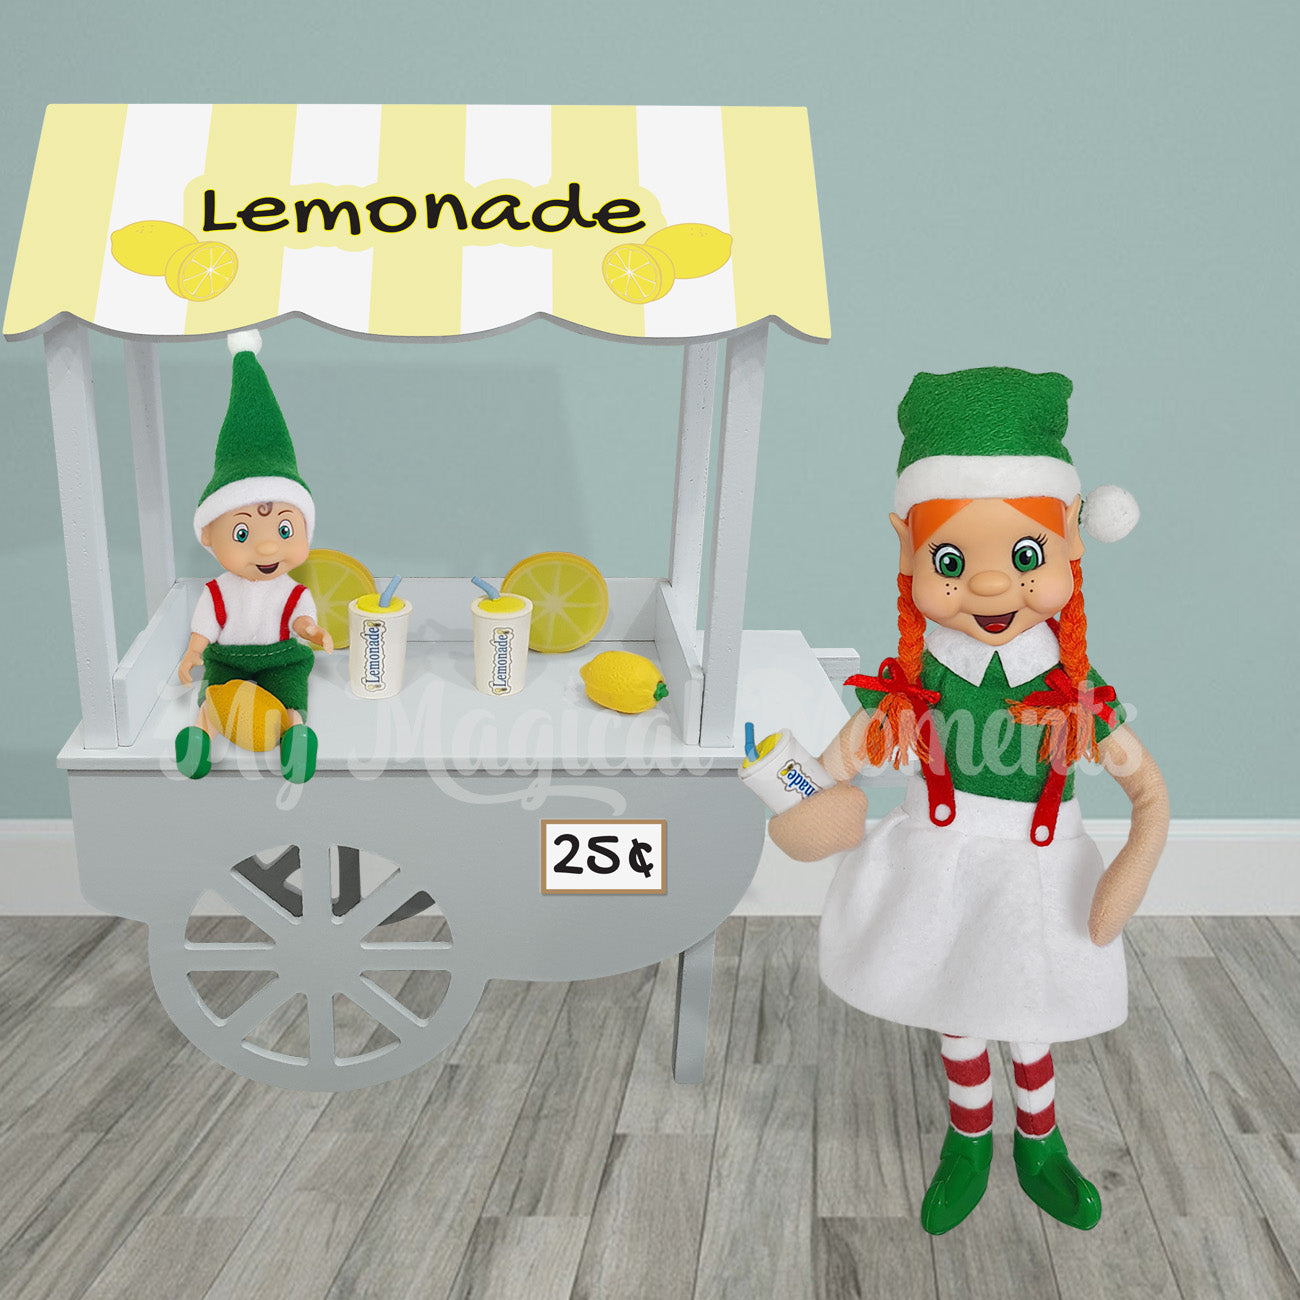 Elf selling Lemonade with a toddler elf